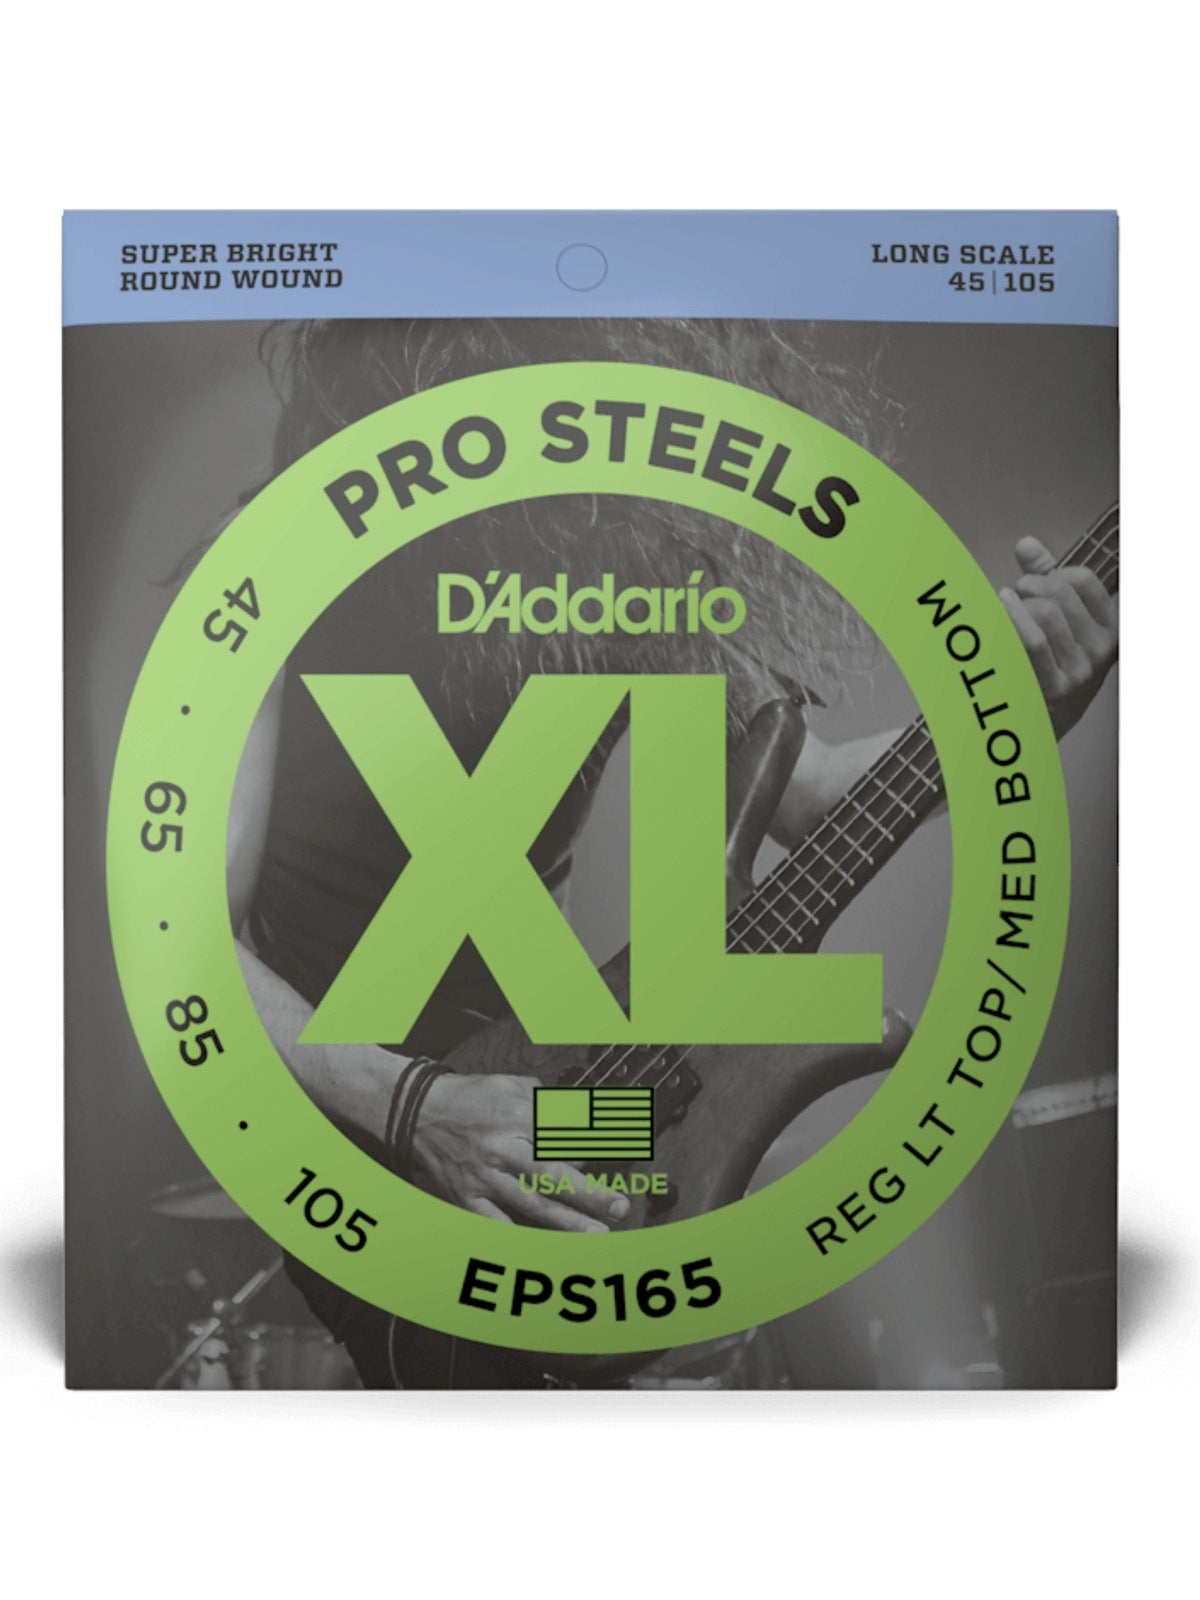 D'Addario XL Pro Steels Bass Strings